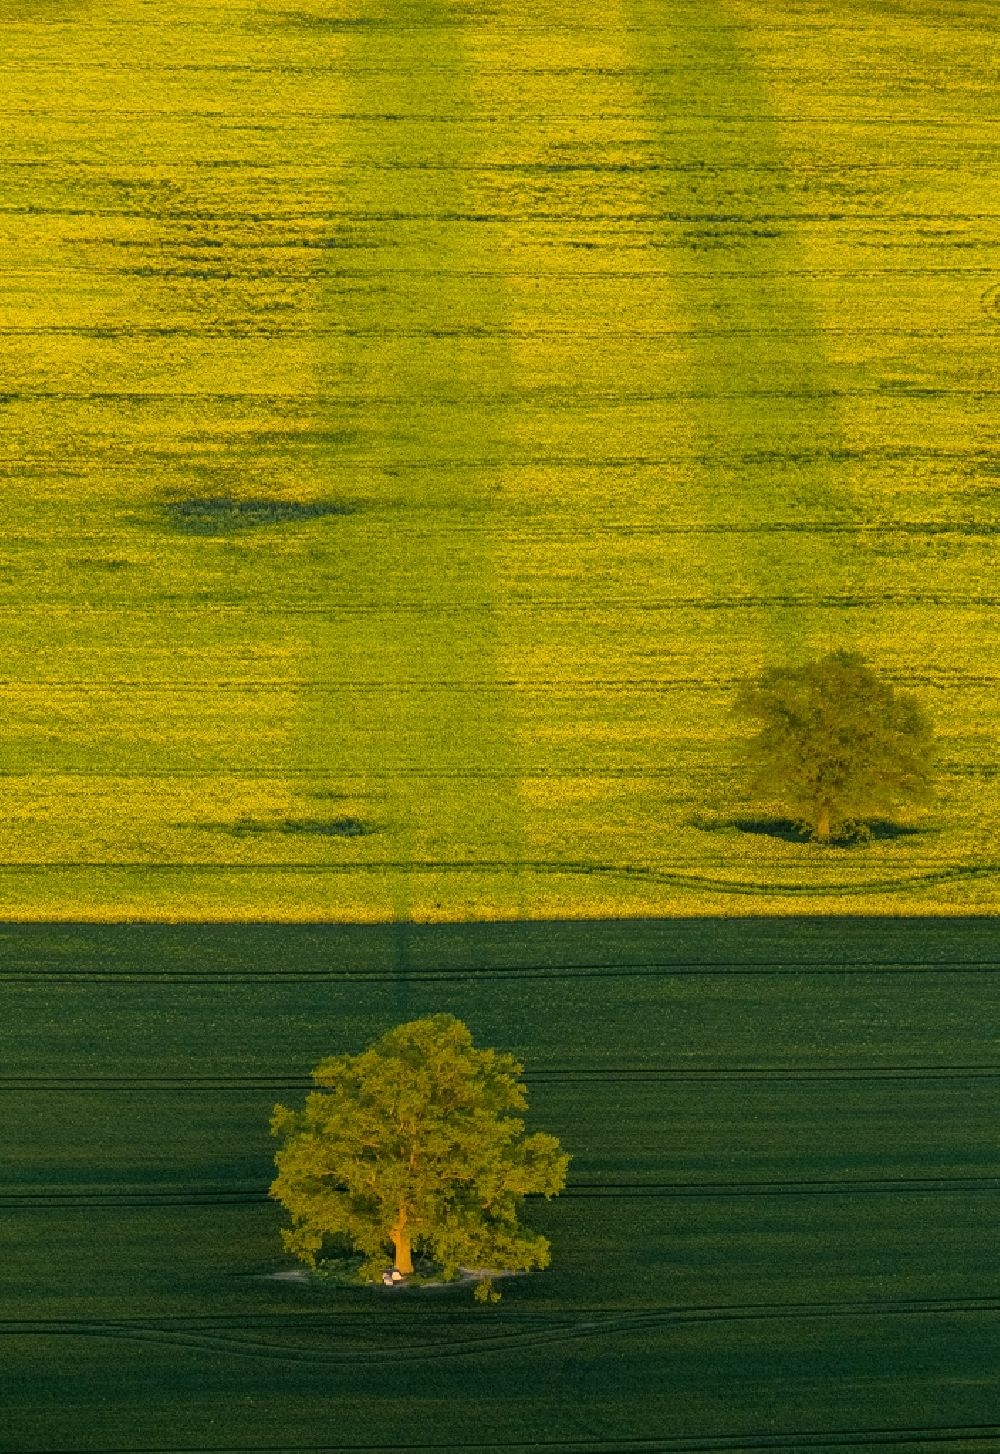 Aerial photograph Röbel/Müritz - Tree landscape with Robel / Mueritz in Mecklenburg-Western Pomerania